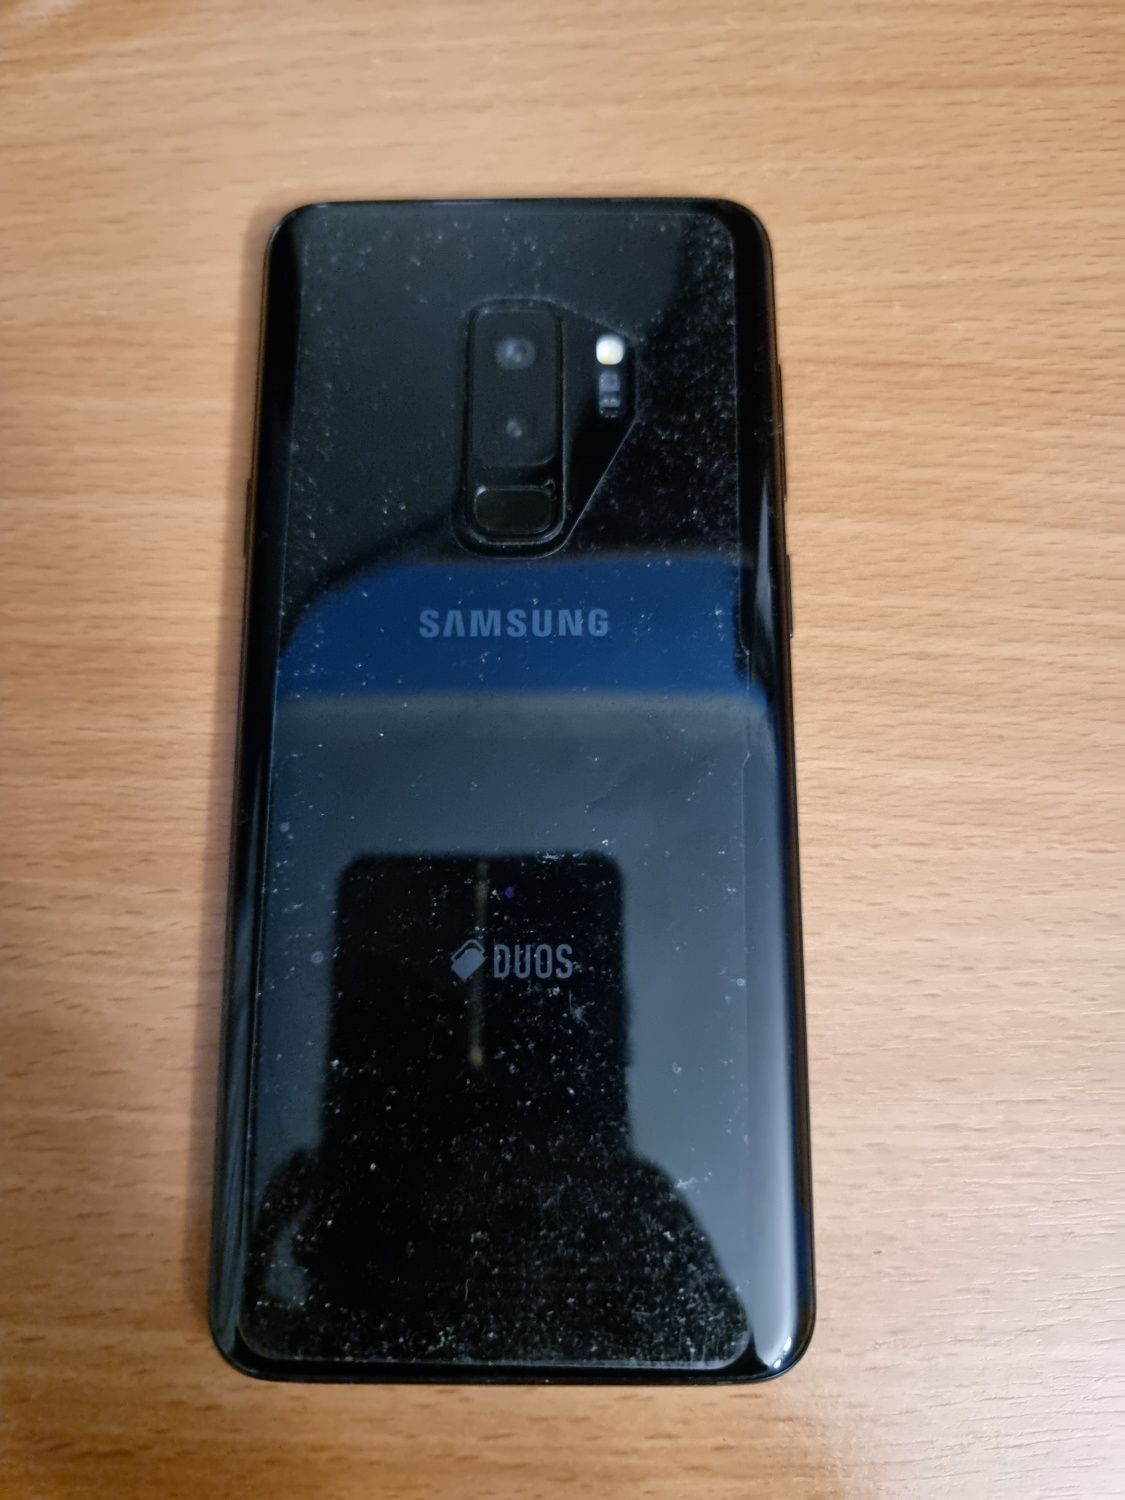 Samsung galaxy s9 plus 64gb